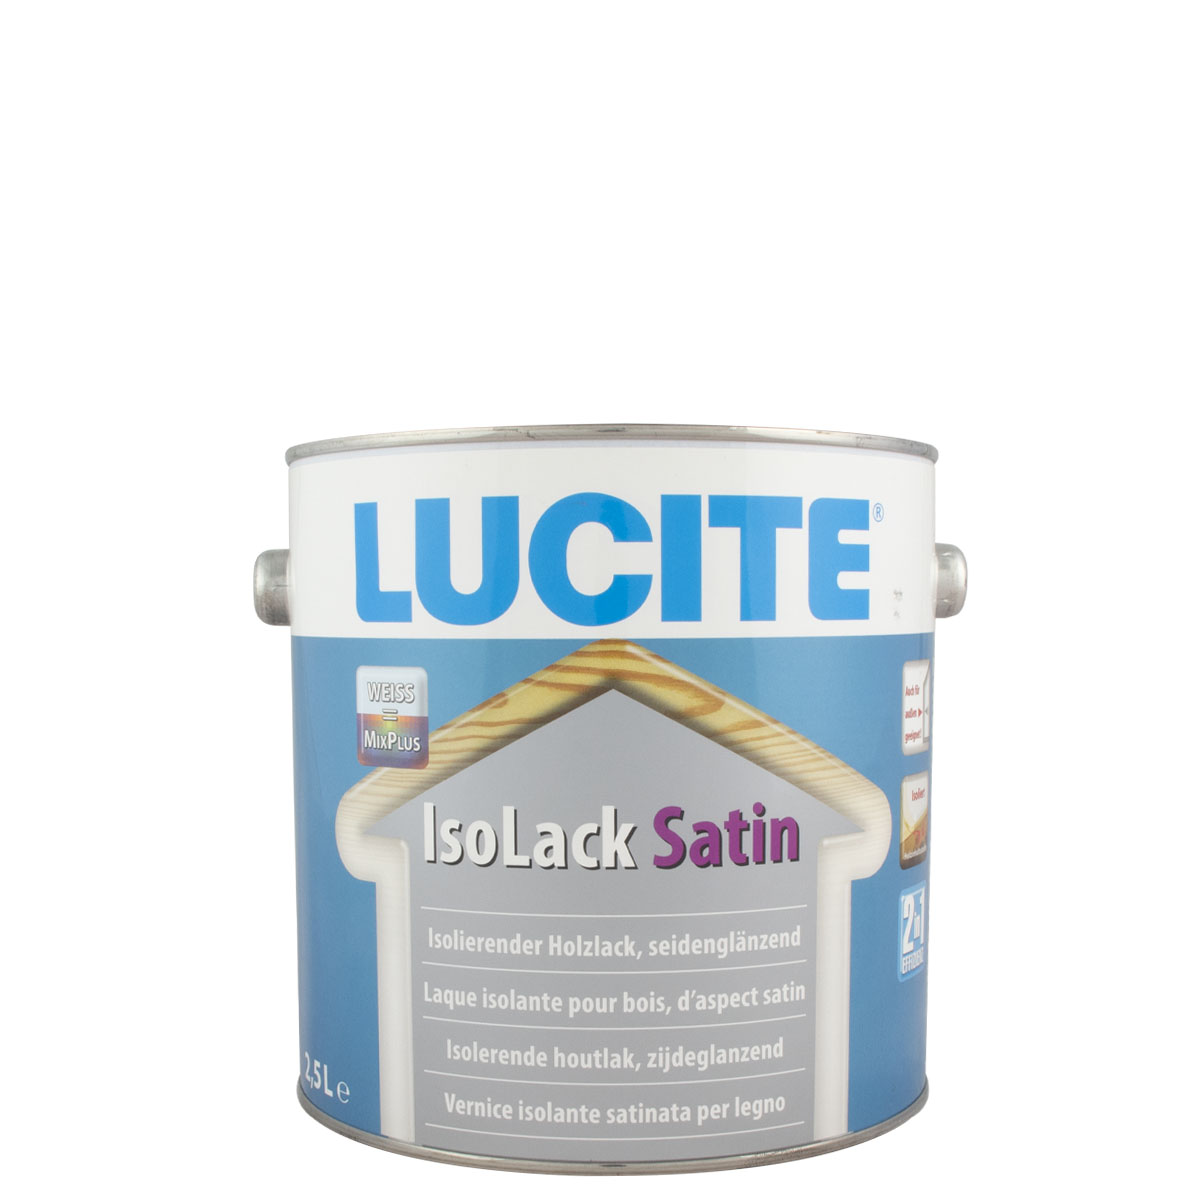 Lucite IsoLack Satin 2,5L seidenglänzend, Isolierender Holzlack